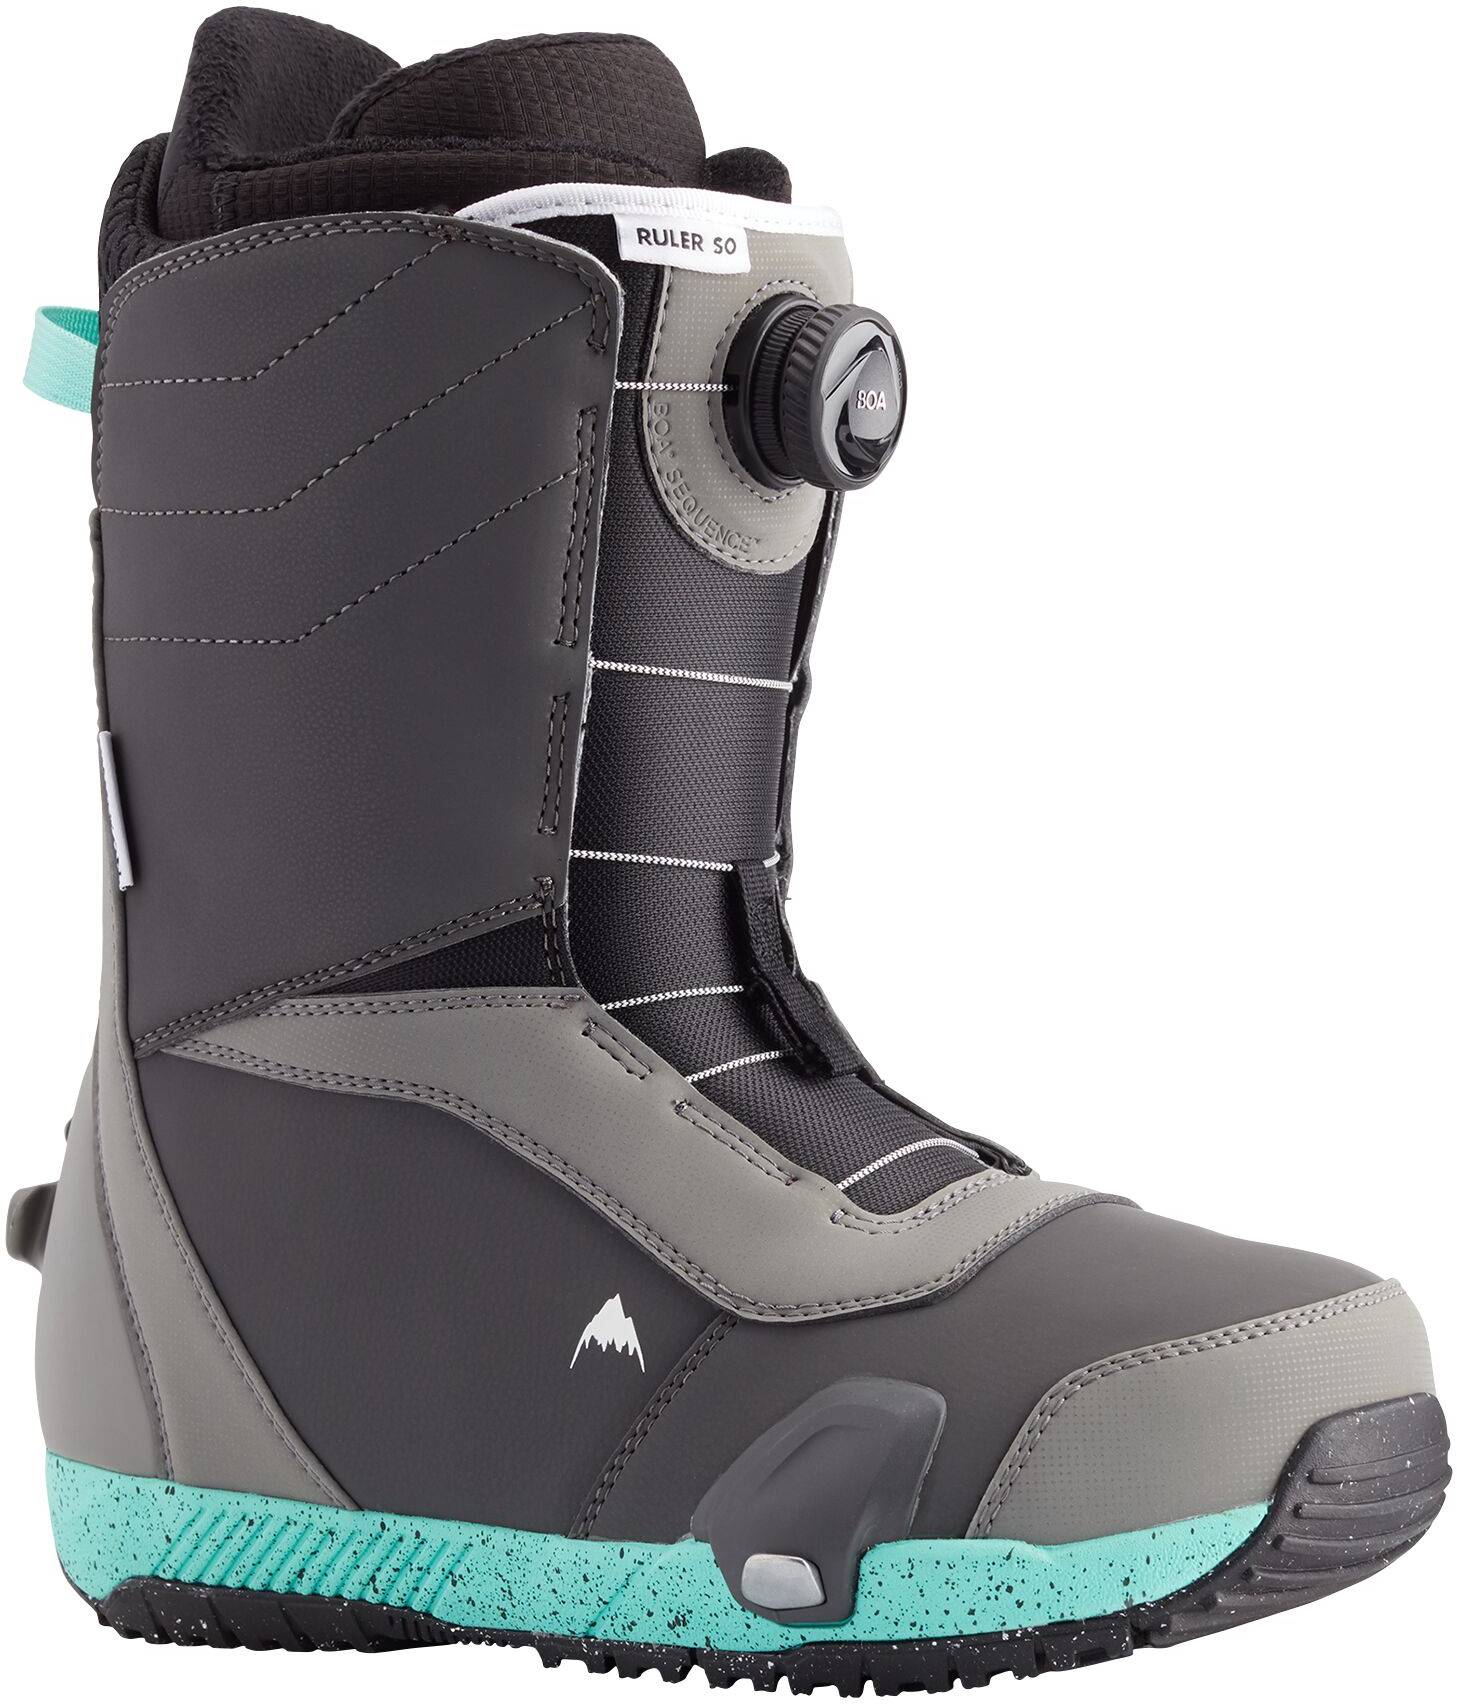 Burton Ruler Step On Snowboard Bindings & Boots